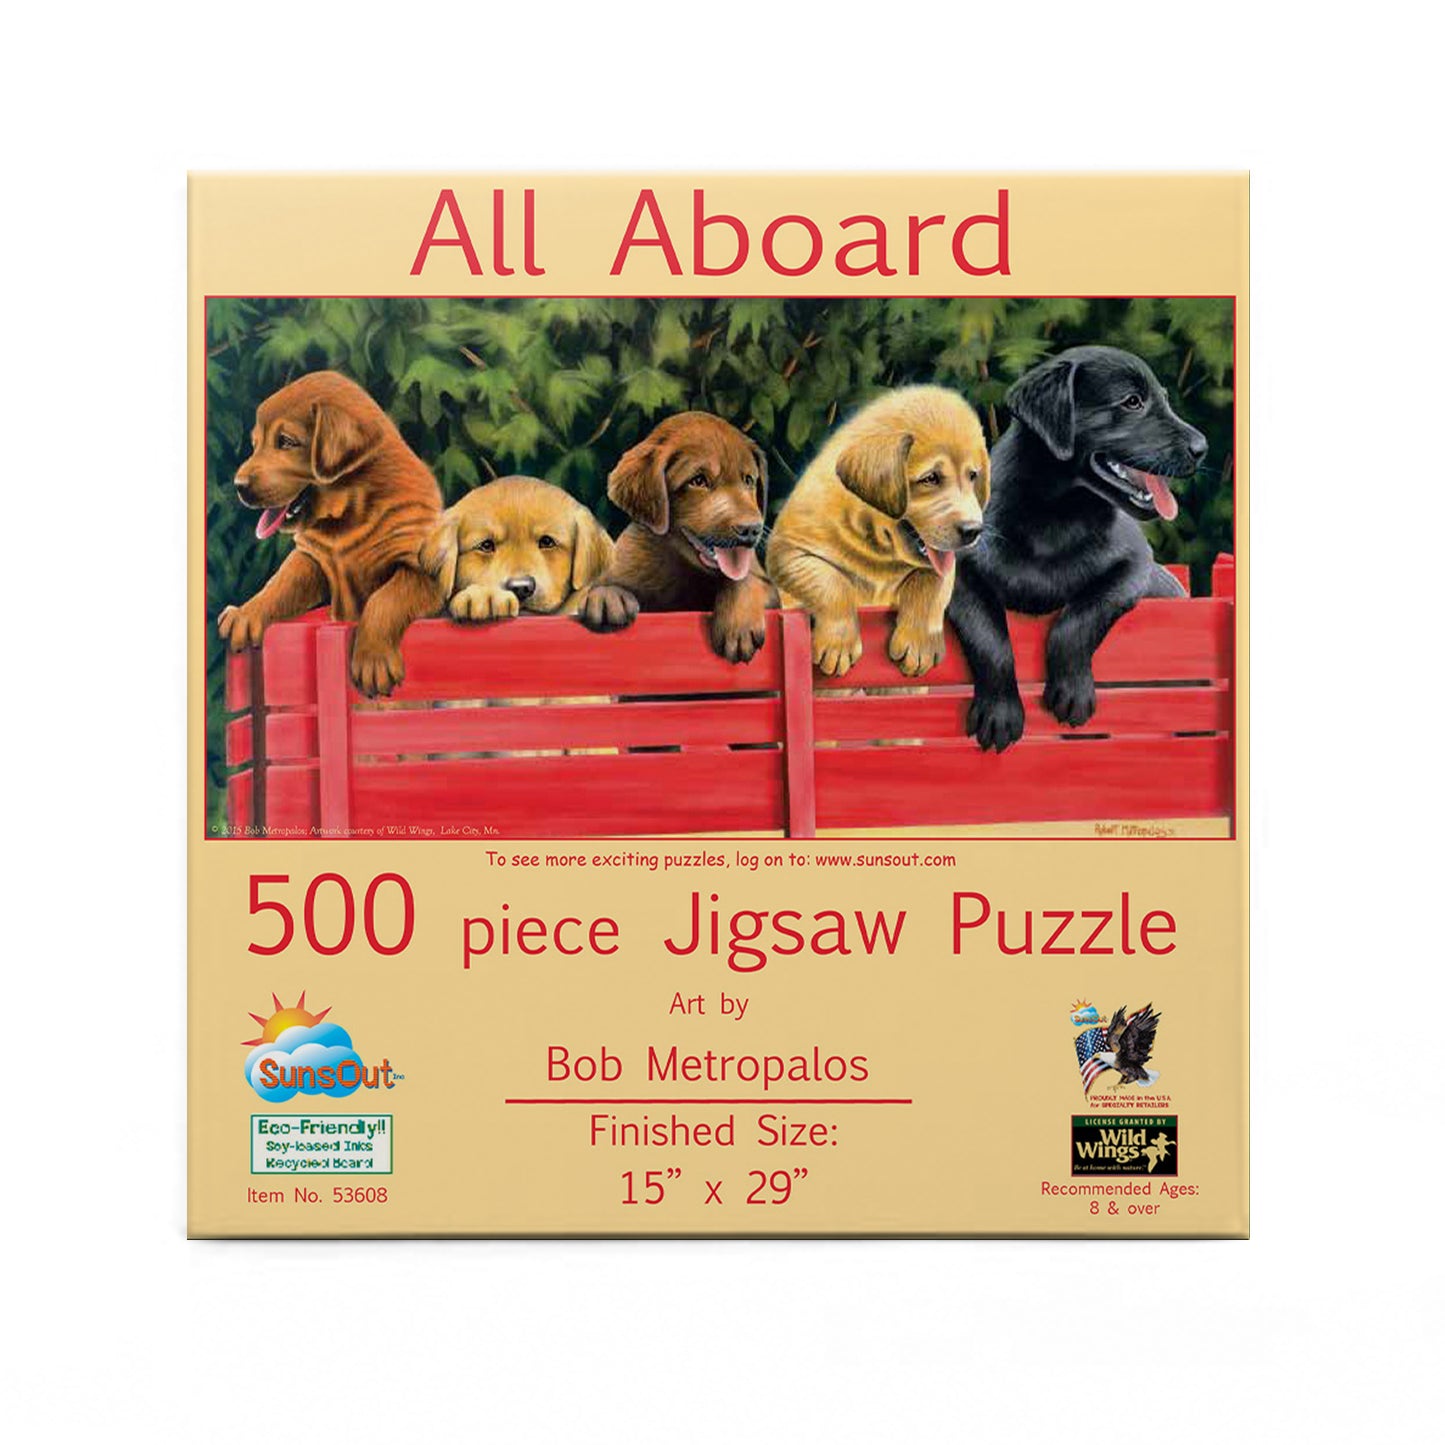 All Aboard - 500 Piece Jigsaw Puzzle